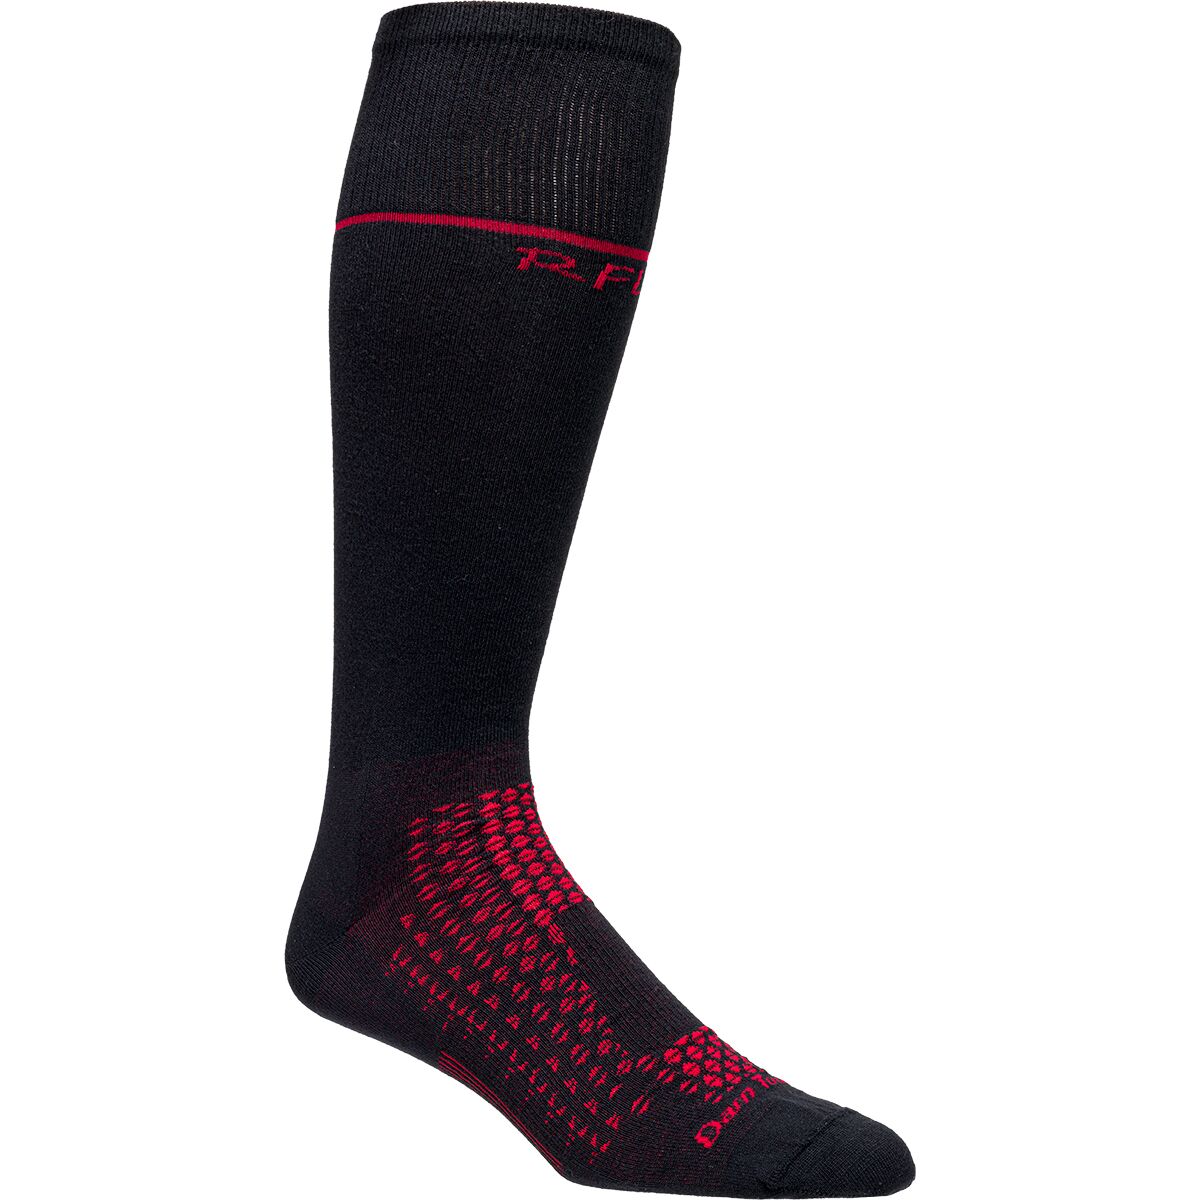 Darn Tough RFL ThermoLite OTC Ultra-Light Sock - Men's